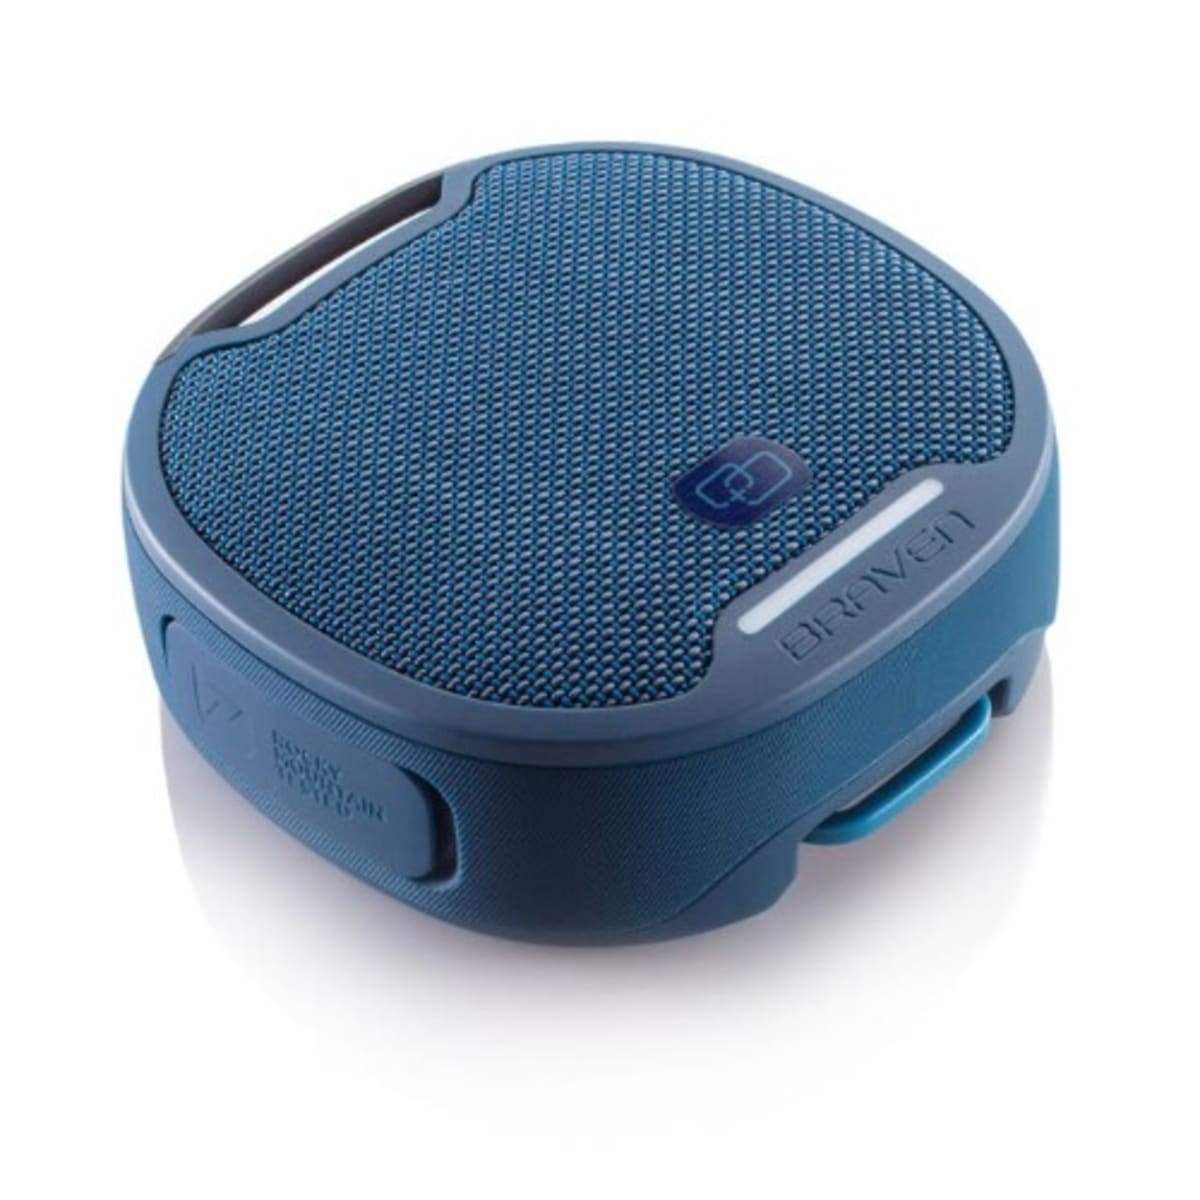 Braven Brv-s Waterproof Rugged Portable Bluetooth Speaker - Blue